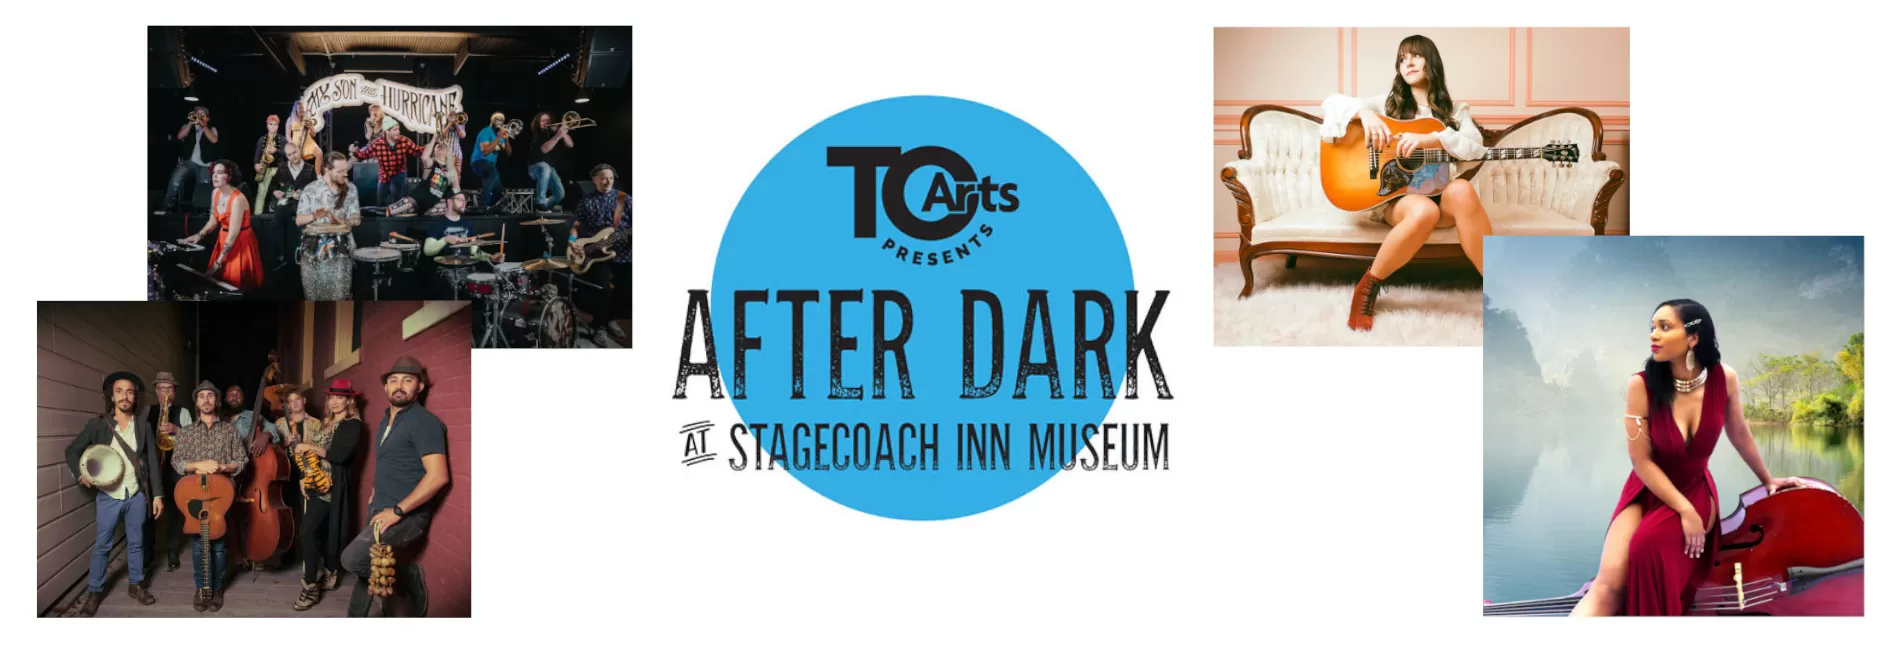 After Dark at Stagecoach Inn Museum